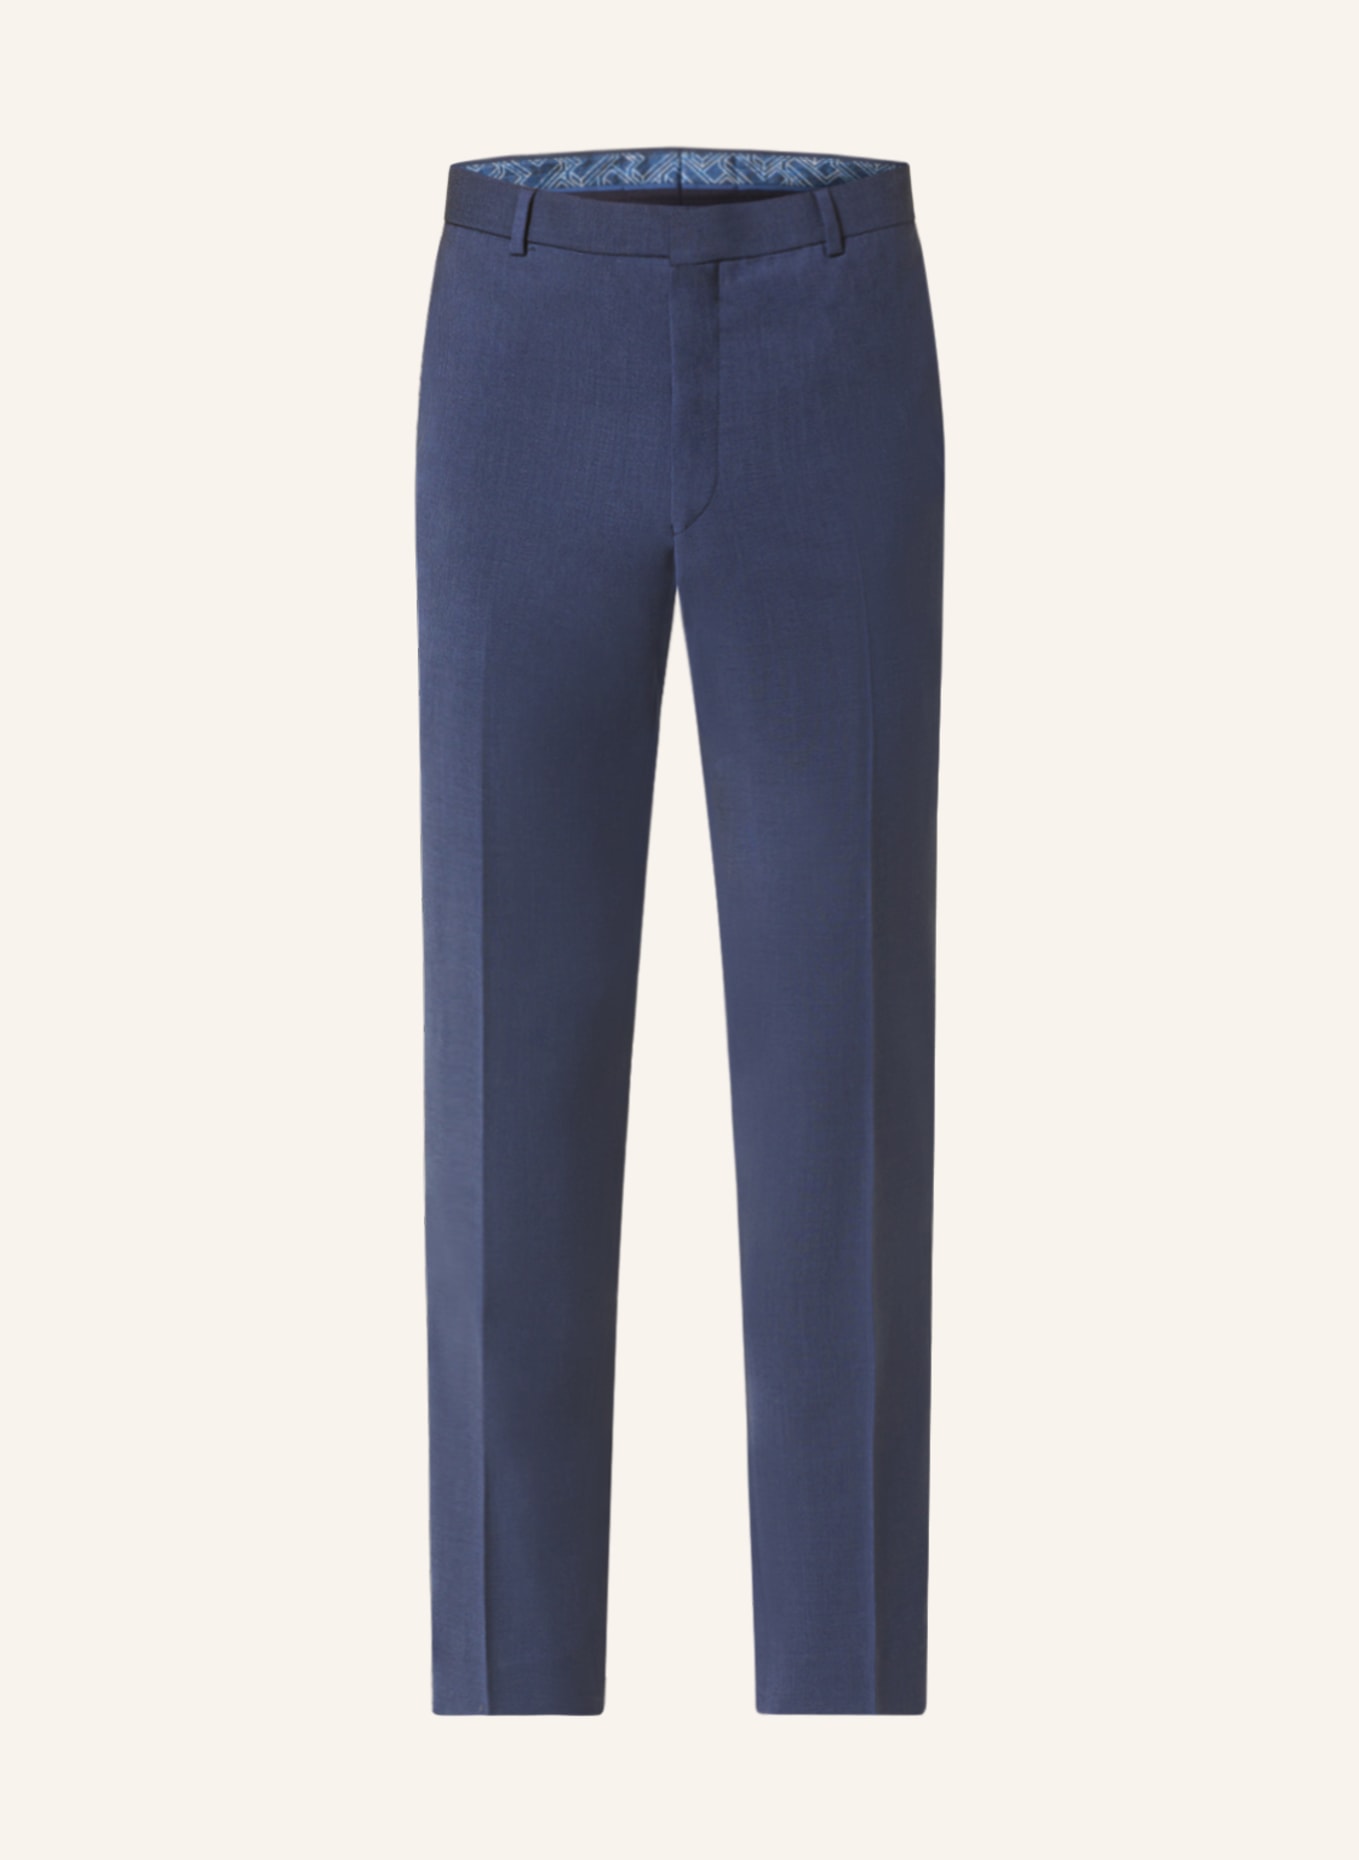 TED BAKER Anzughose SINJTS Slim Fit, Farbe: DK-BLUE DK-BLUE (Bild 1)